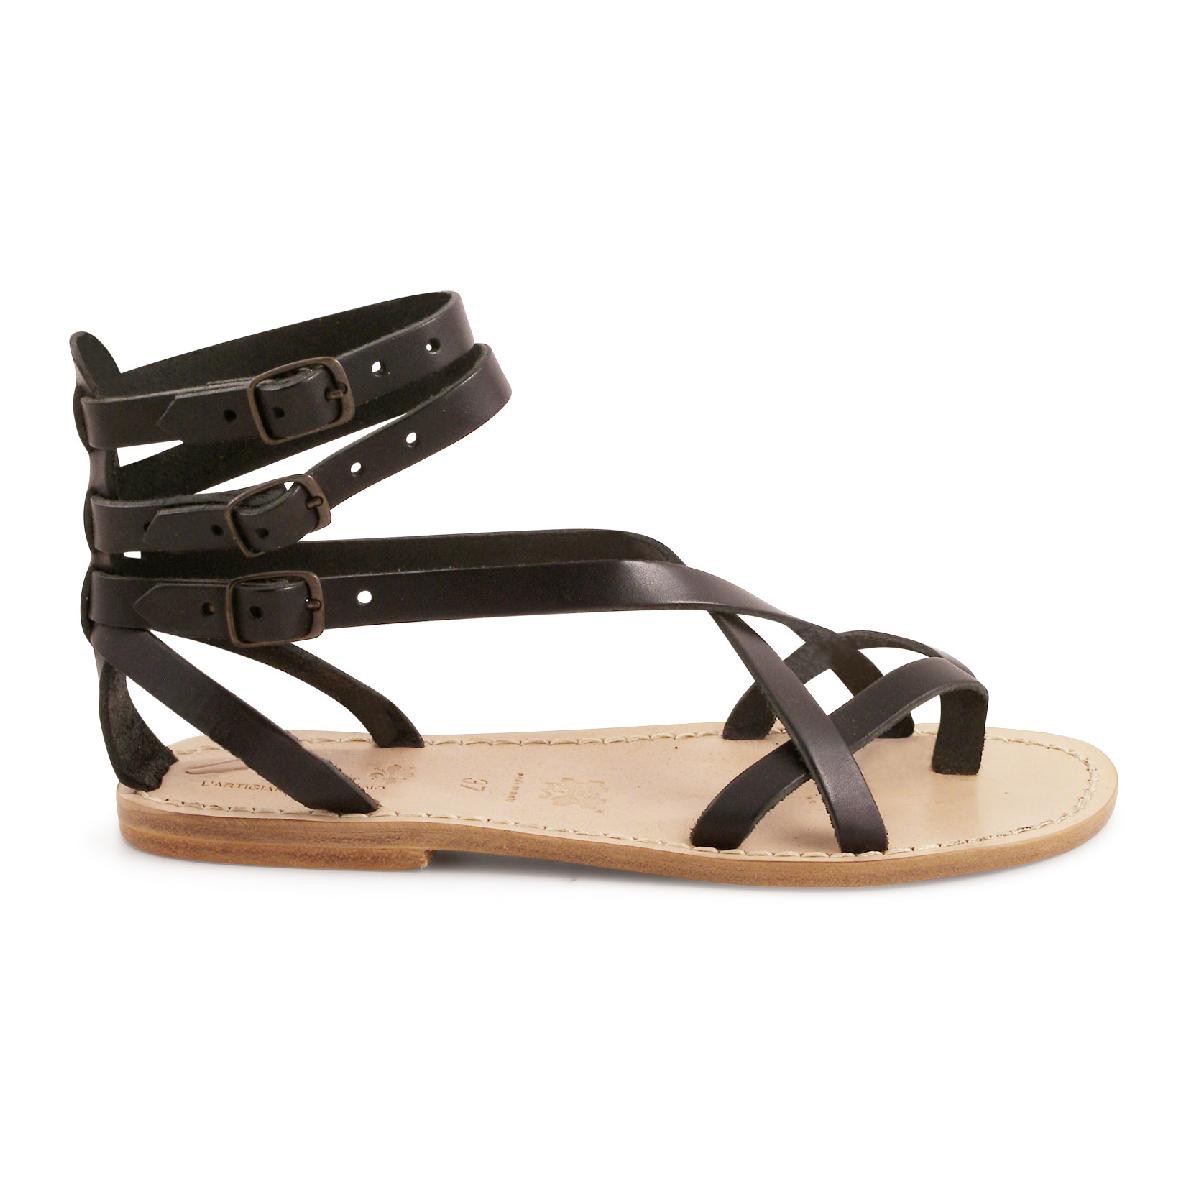 Gladiator sandals for women in black leather handmade | Gianluca - The ...